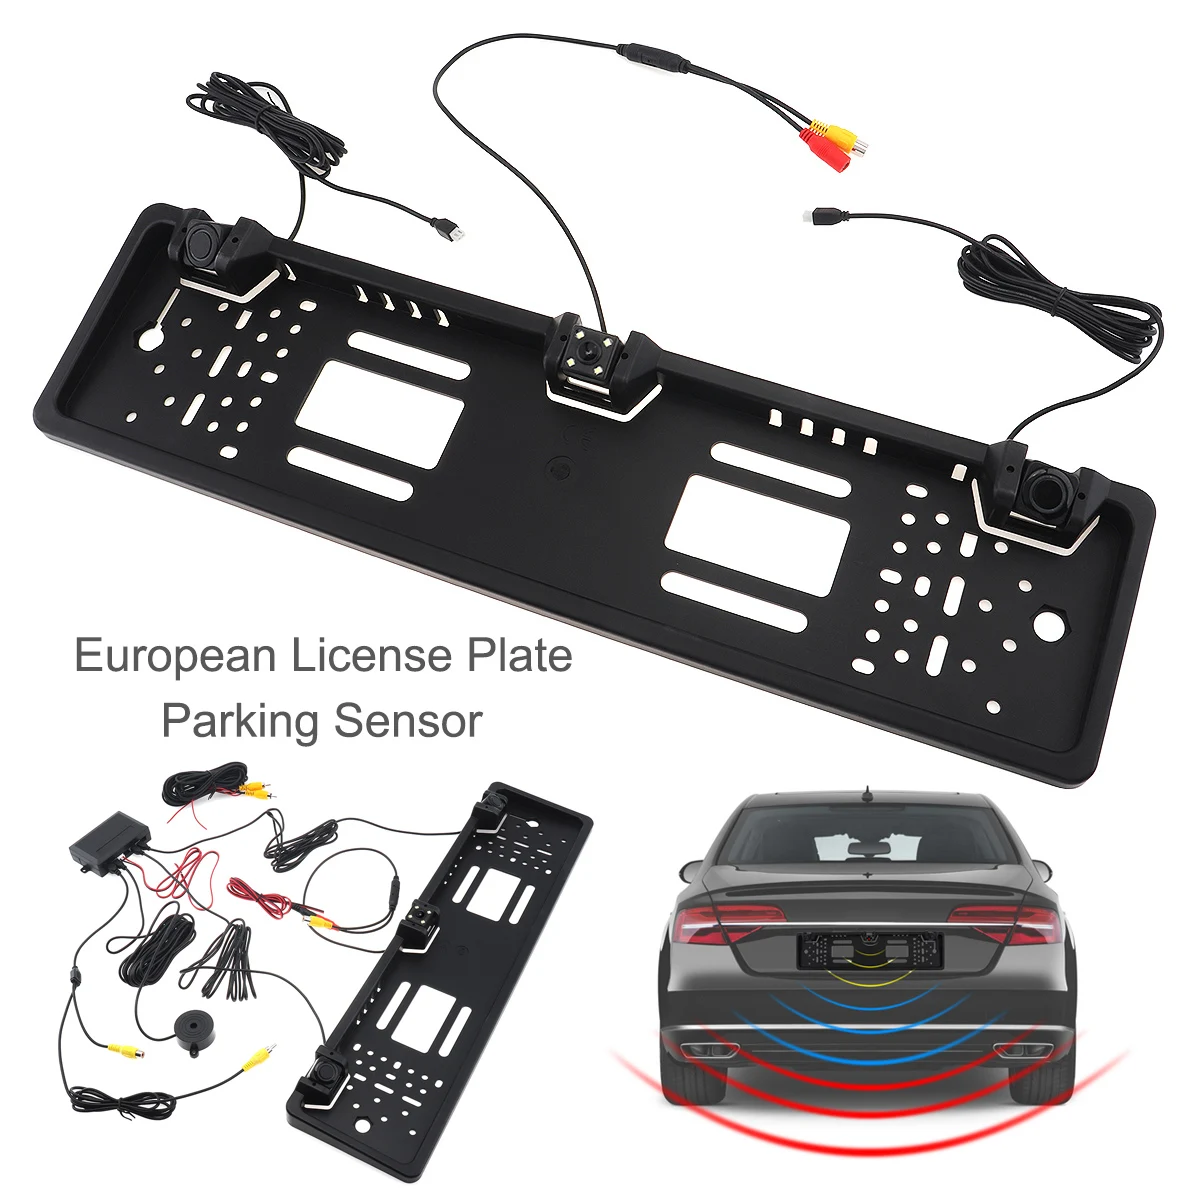 

Car Rear View Camera HD CCD 170 Degree Auto Parktronic EU Car License Plate Frame with 2 Visual Reversing Radar Detector Backup